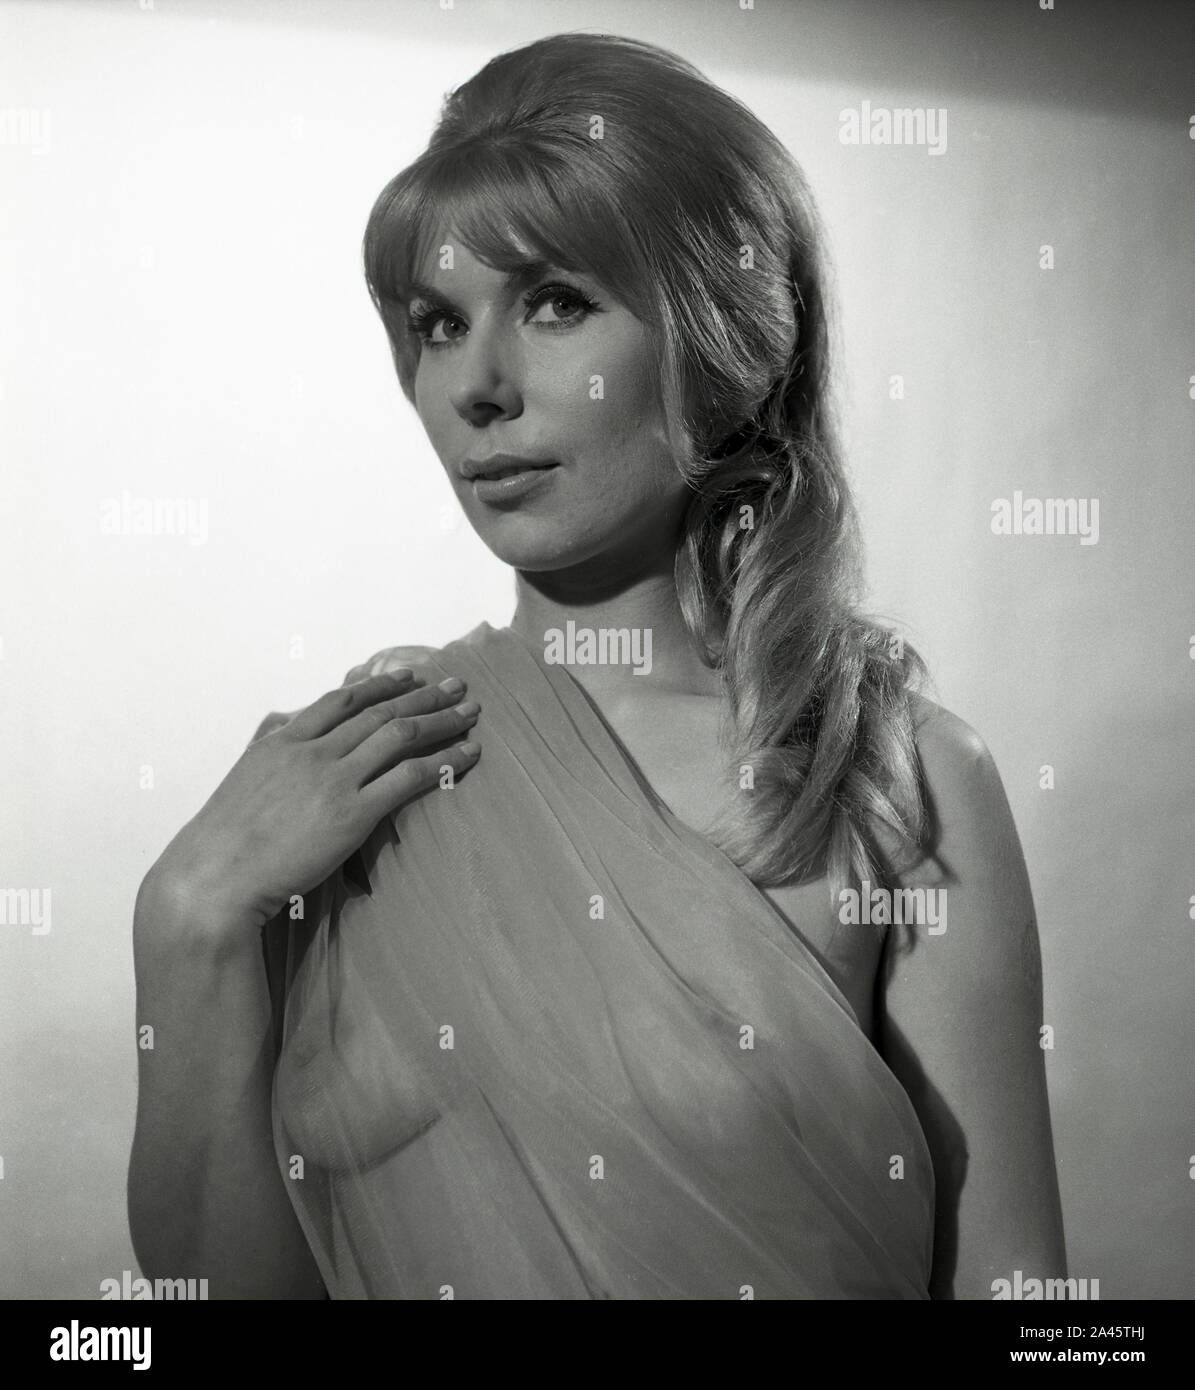 1960's photoshoot Female Model Classically Dressed like a Roman or Greek Goddess, c1969  Photo by Tony Henshaw Archive Stock Photo